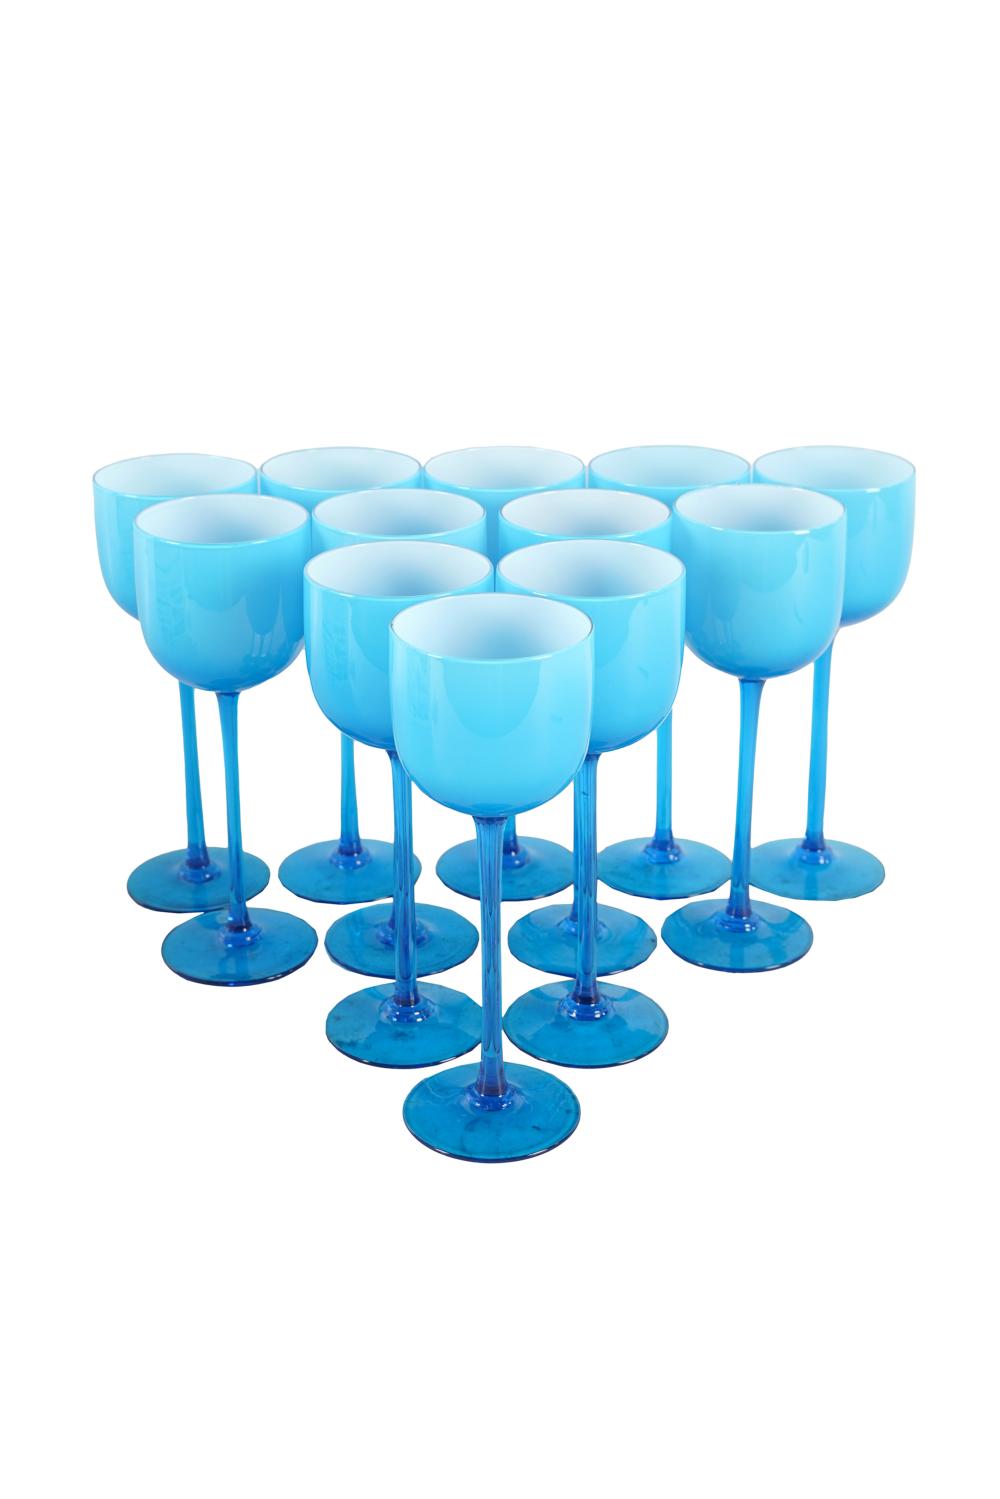 TWELVE MURANO-STYLE BLUE GLASS